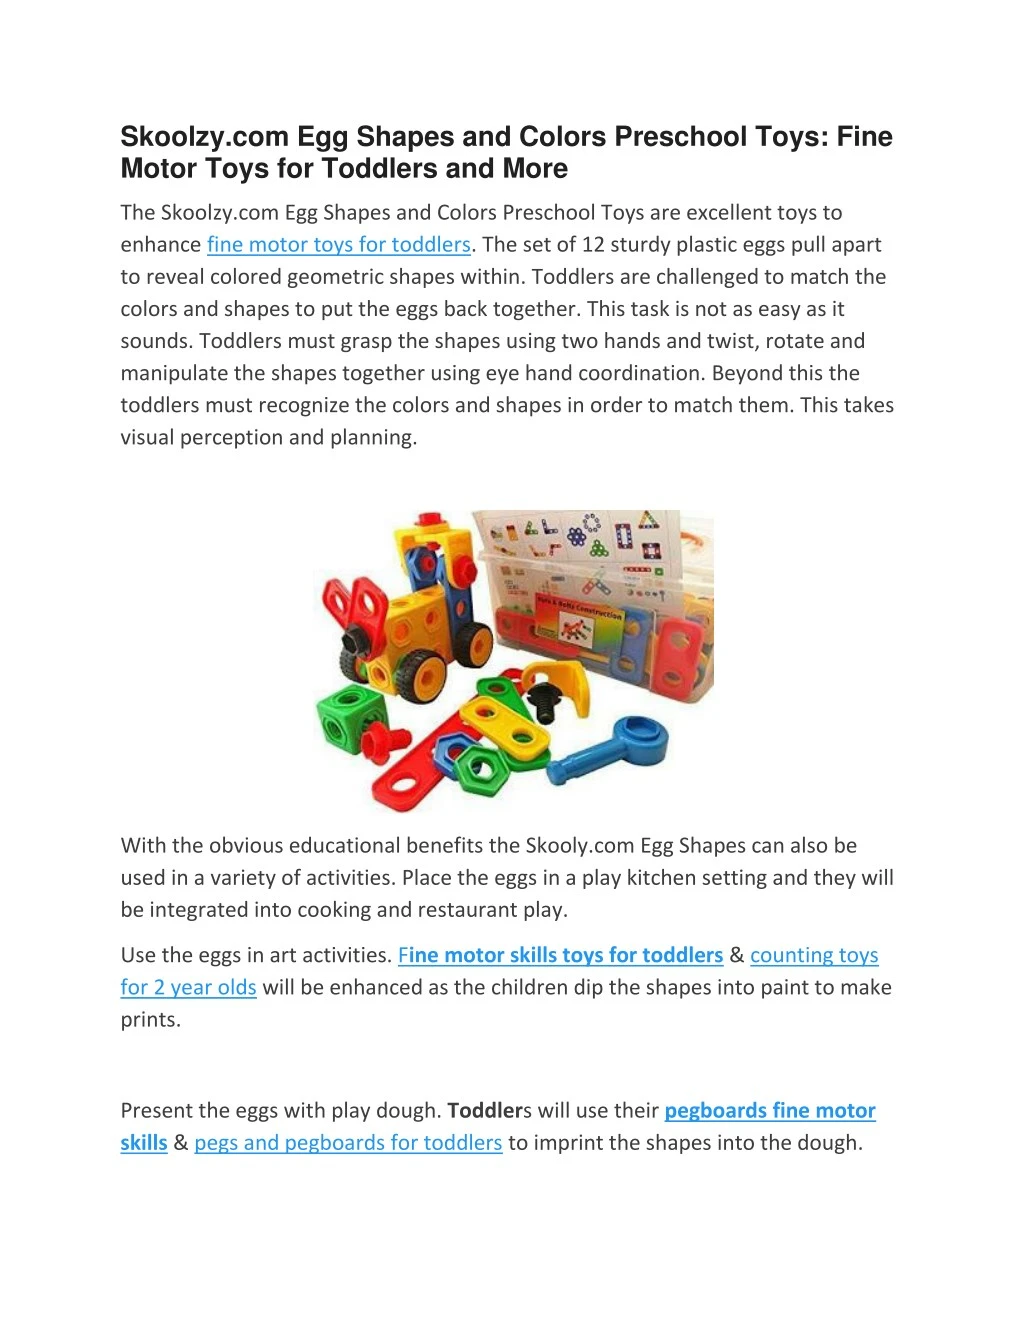 skoolzy com egg shapes and colors preschool toys